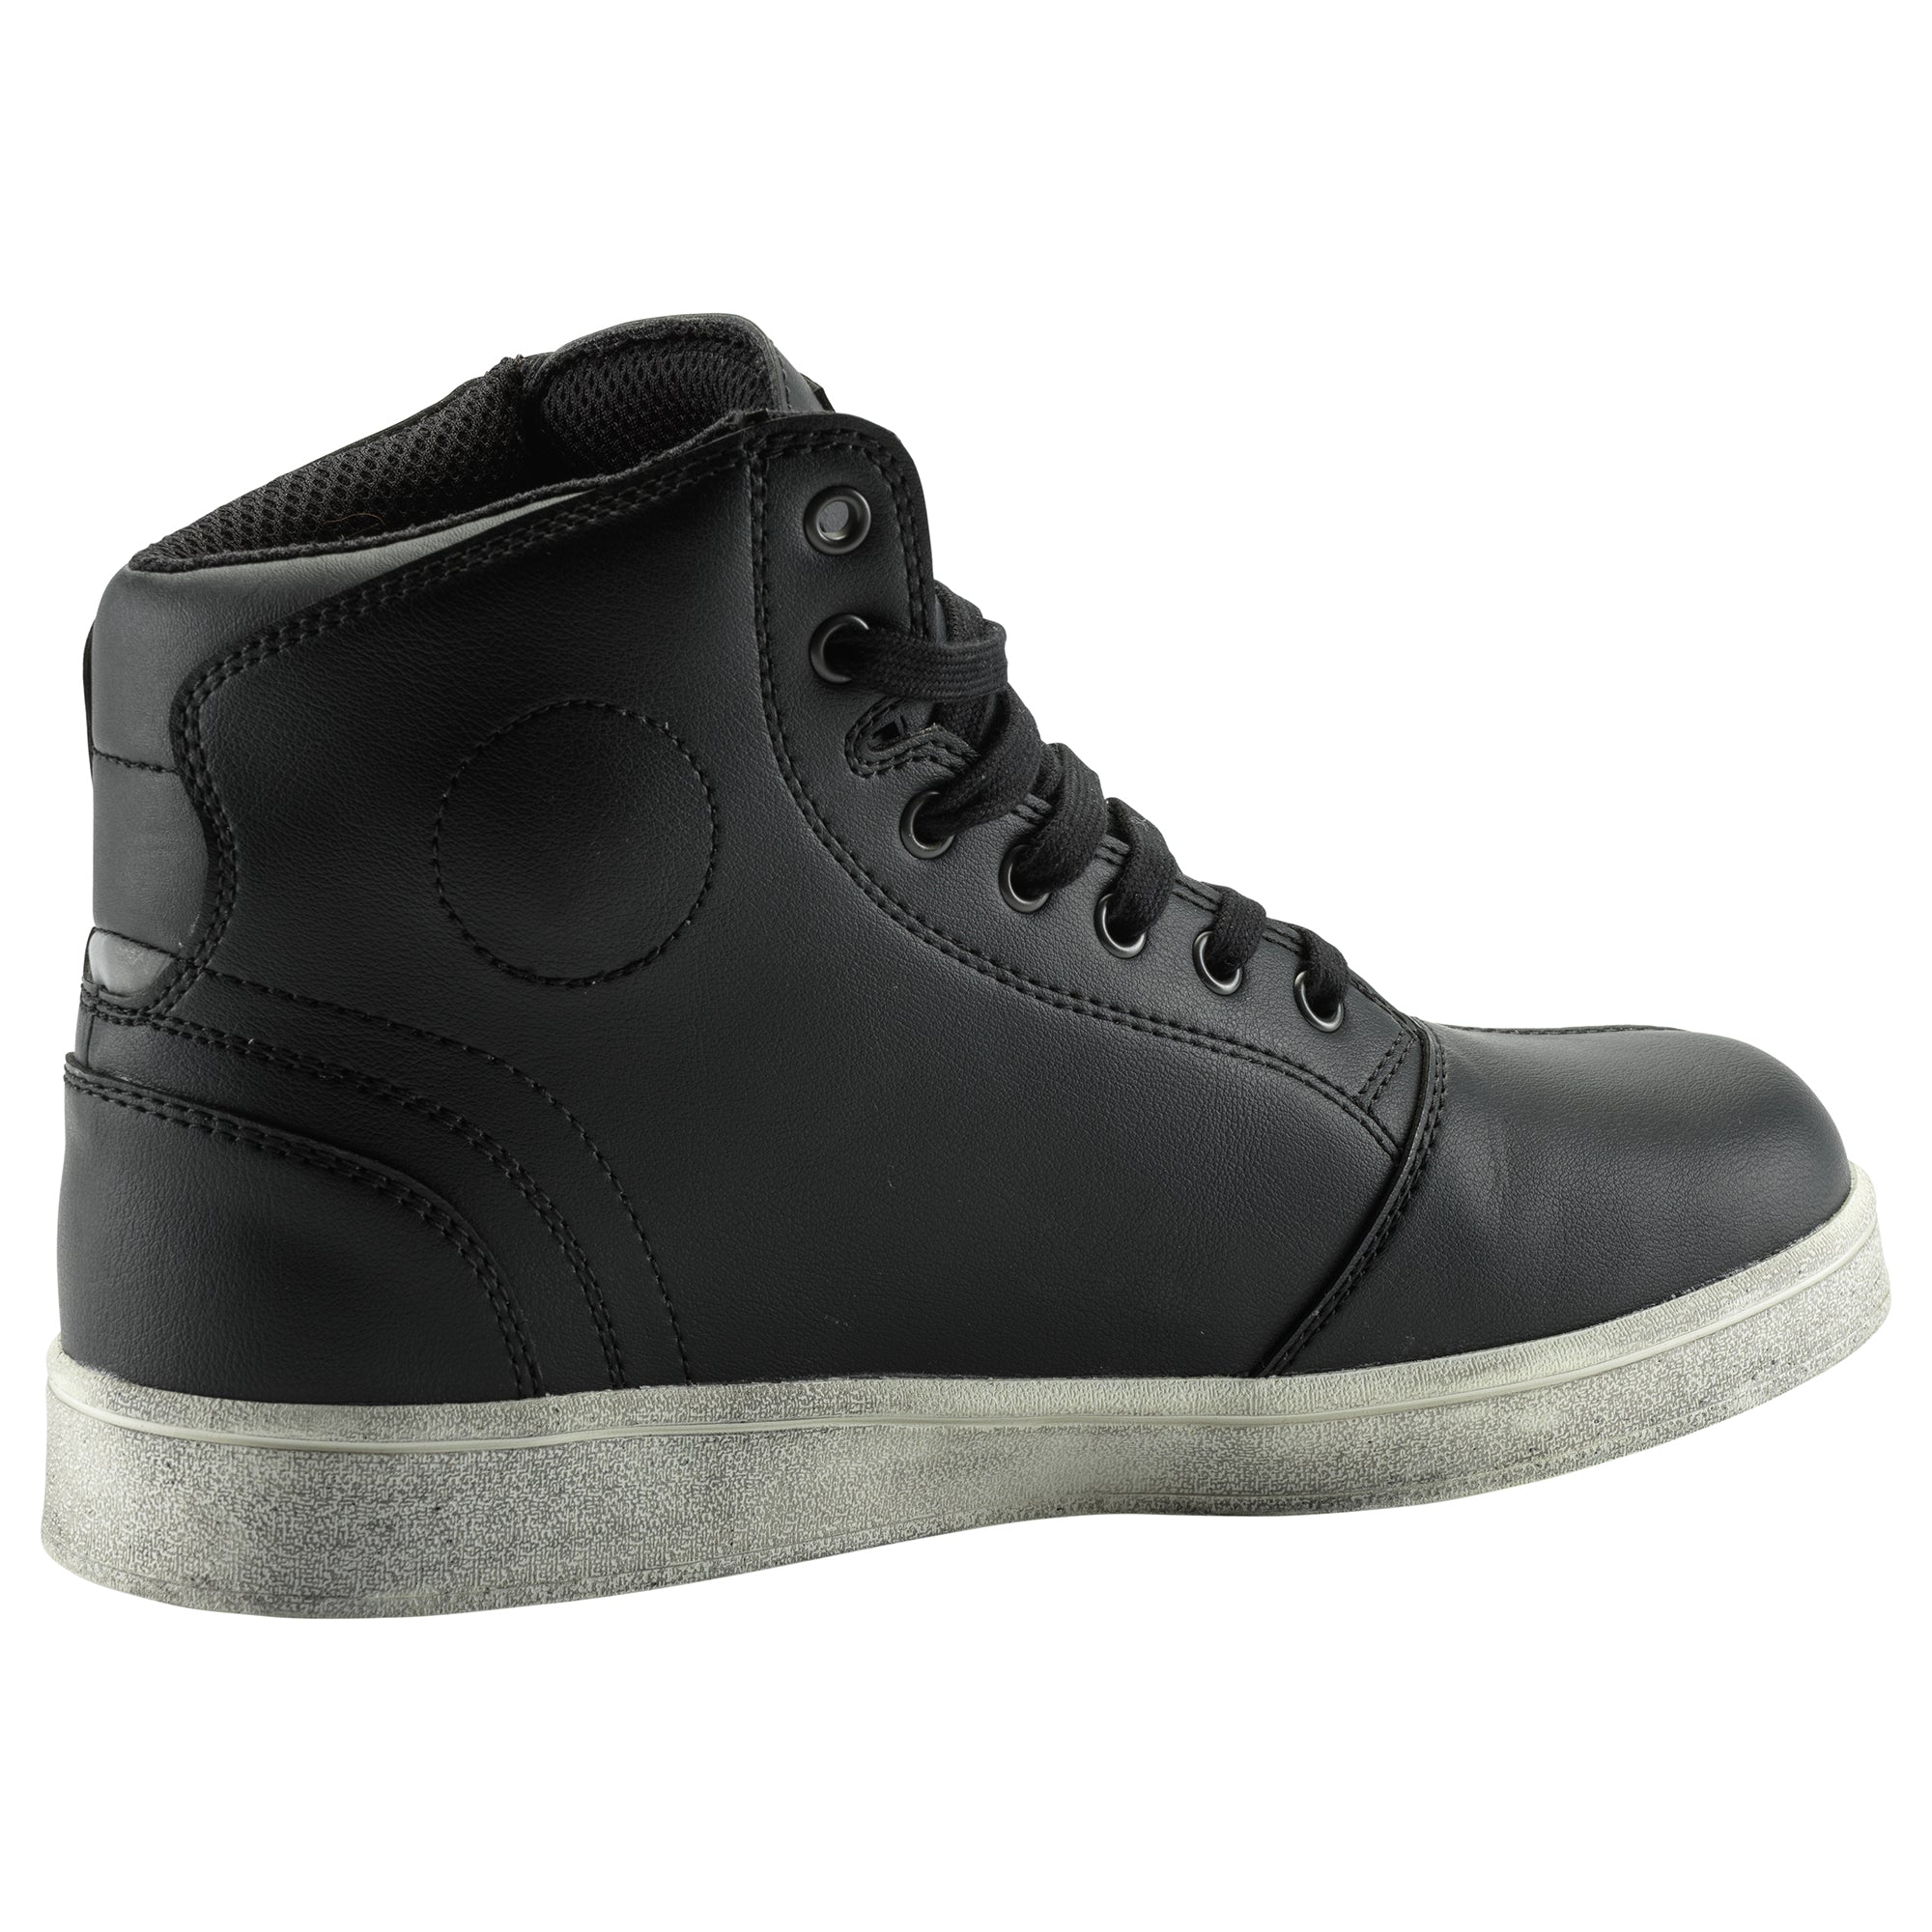 RCX Shoe Black